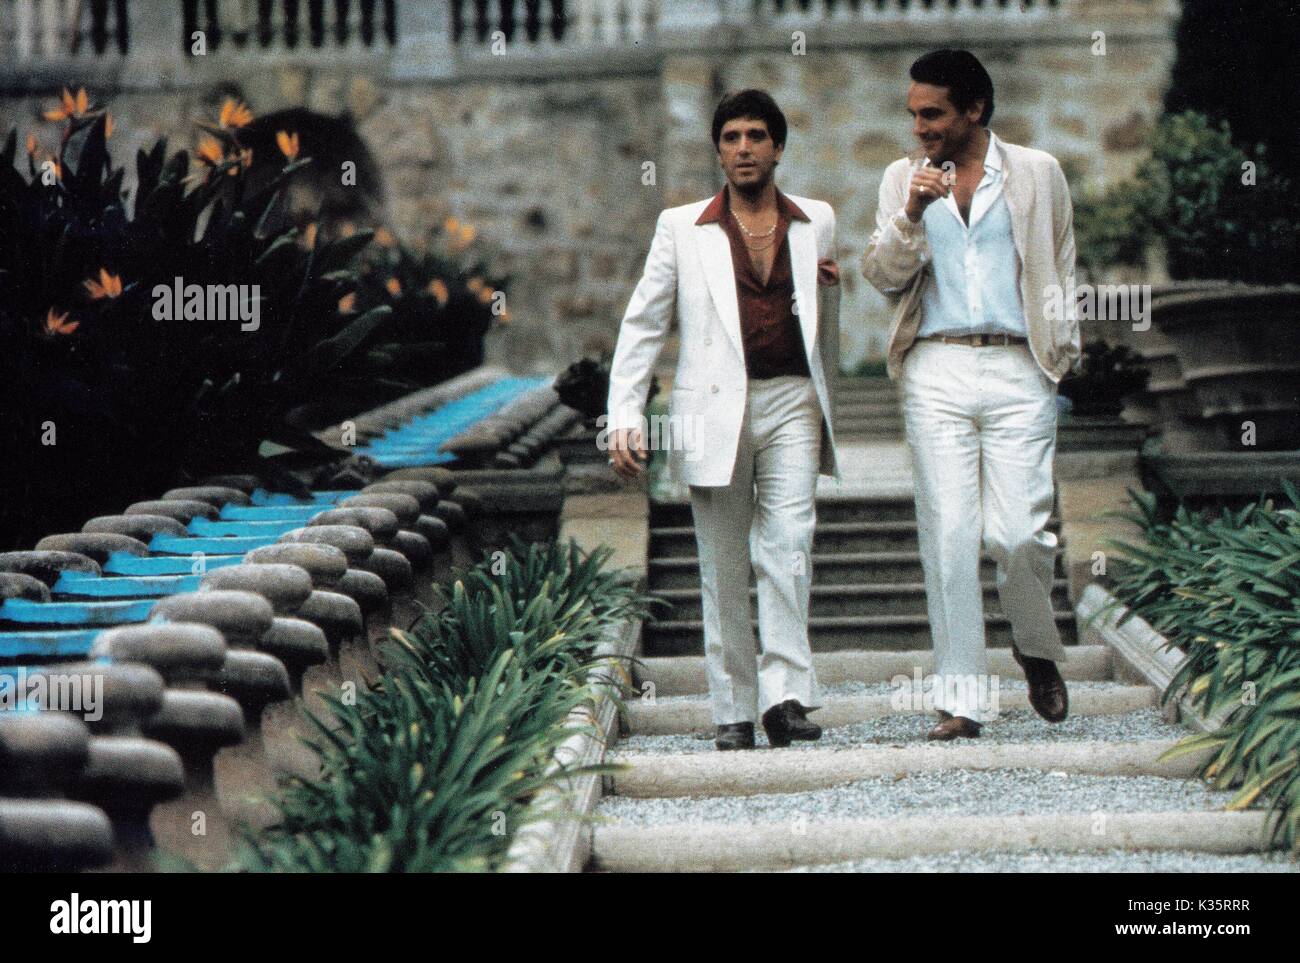 Scarface, USA 1983, Regie: Brian De Palma, Darsteller: Al Pacino, Paul Shenar Foto Stock